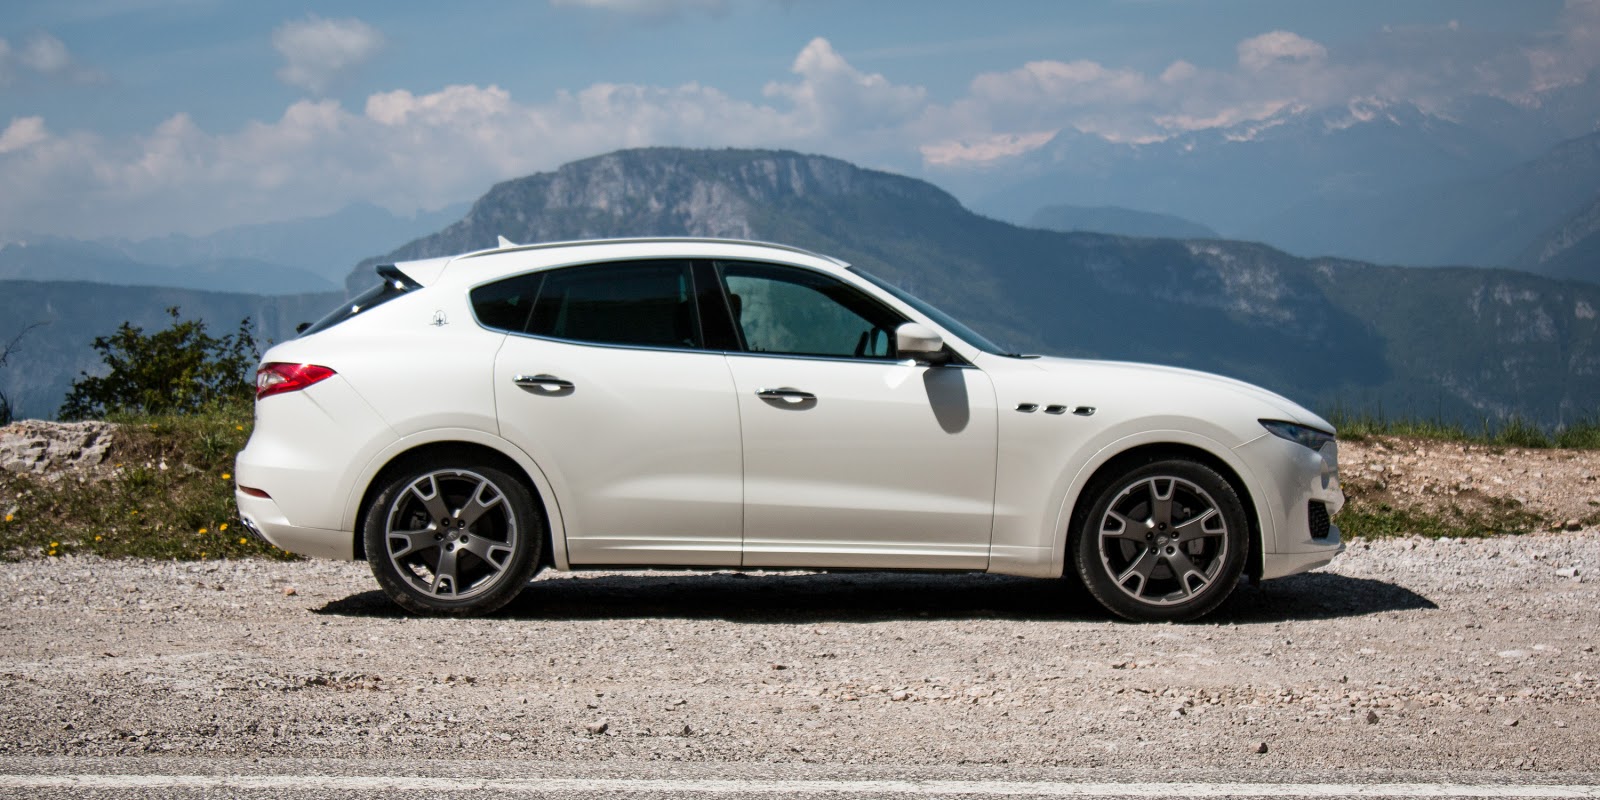 Đánh giá xe Maserati Levante 2017